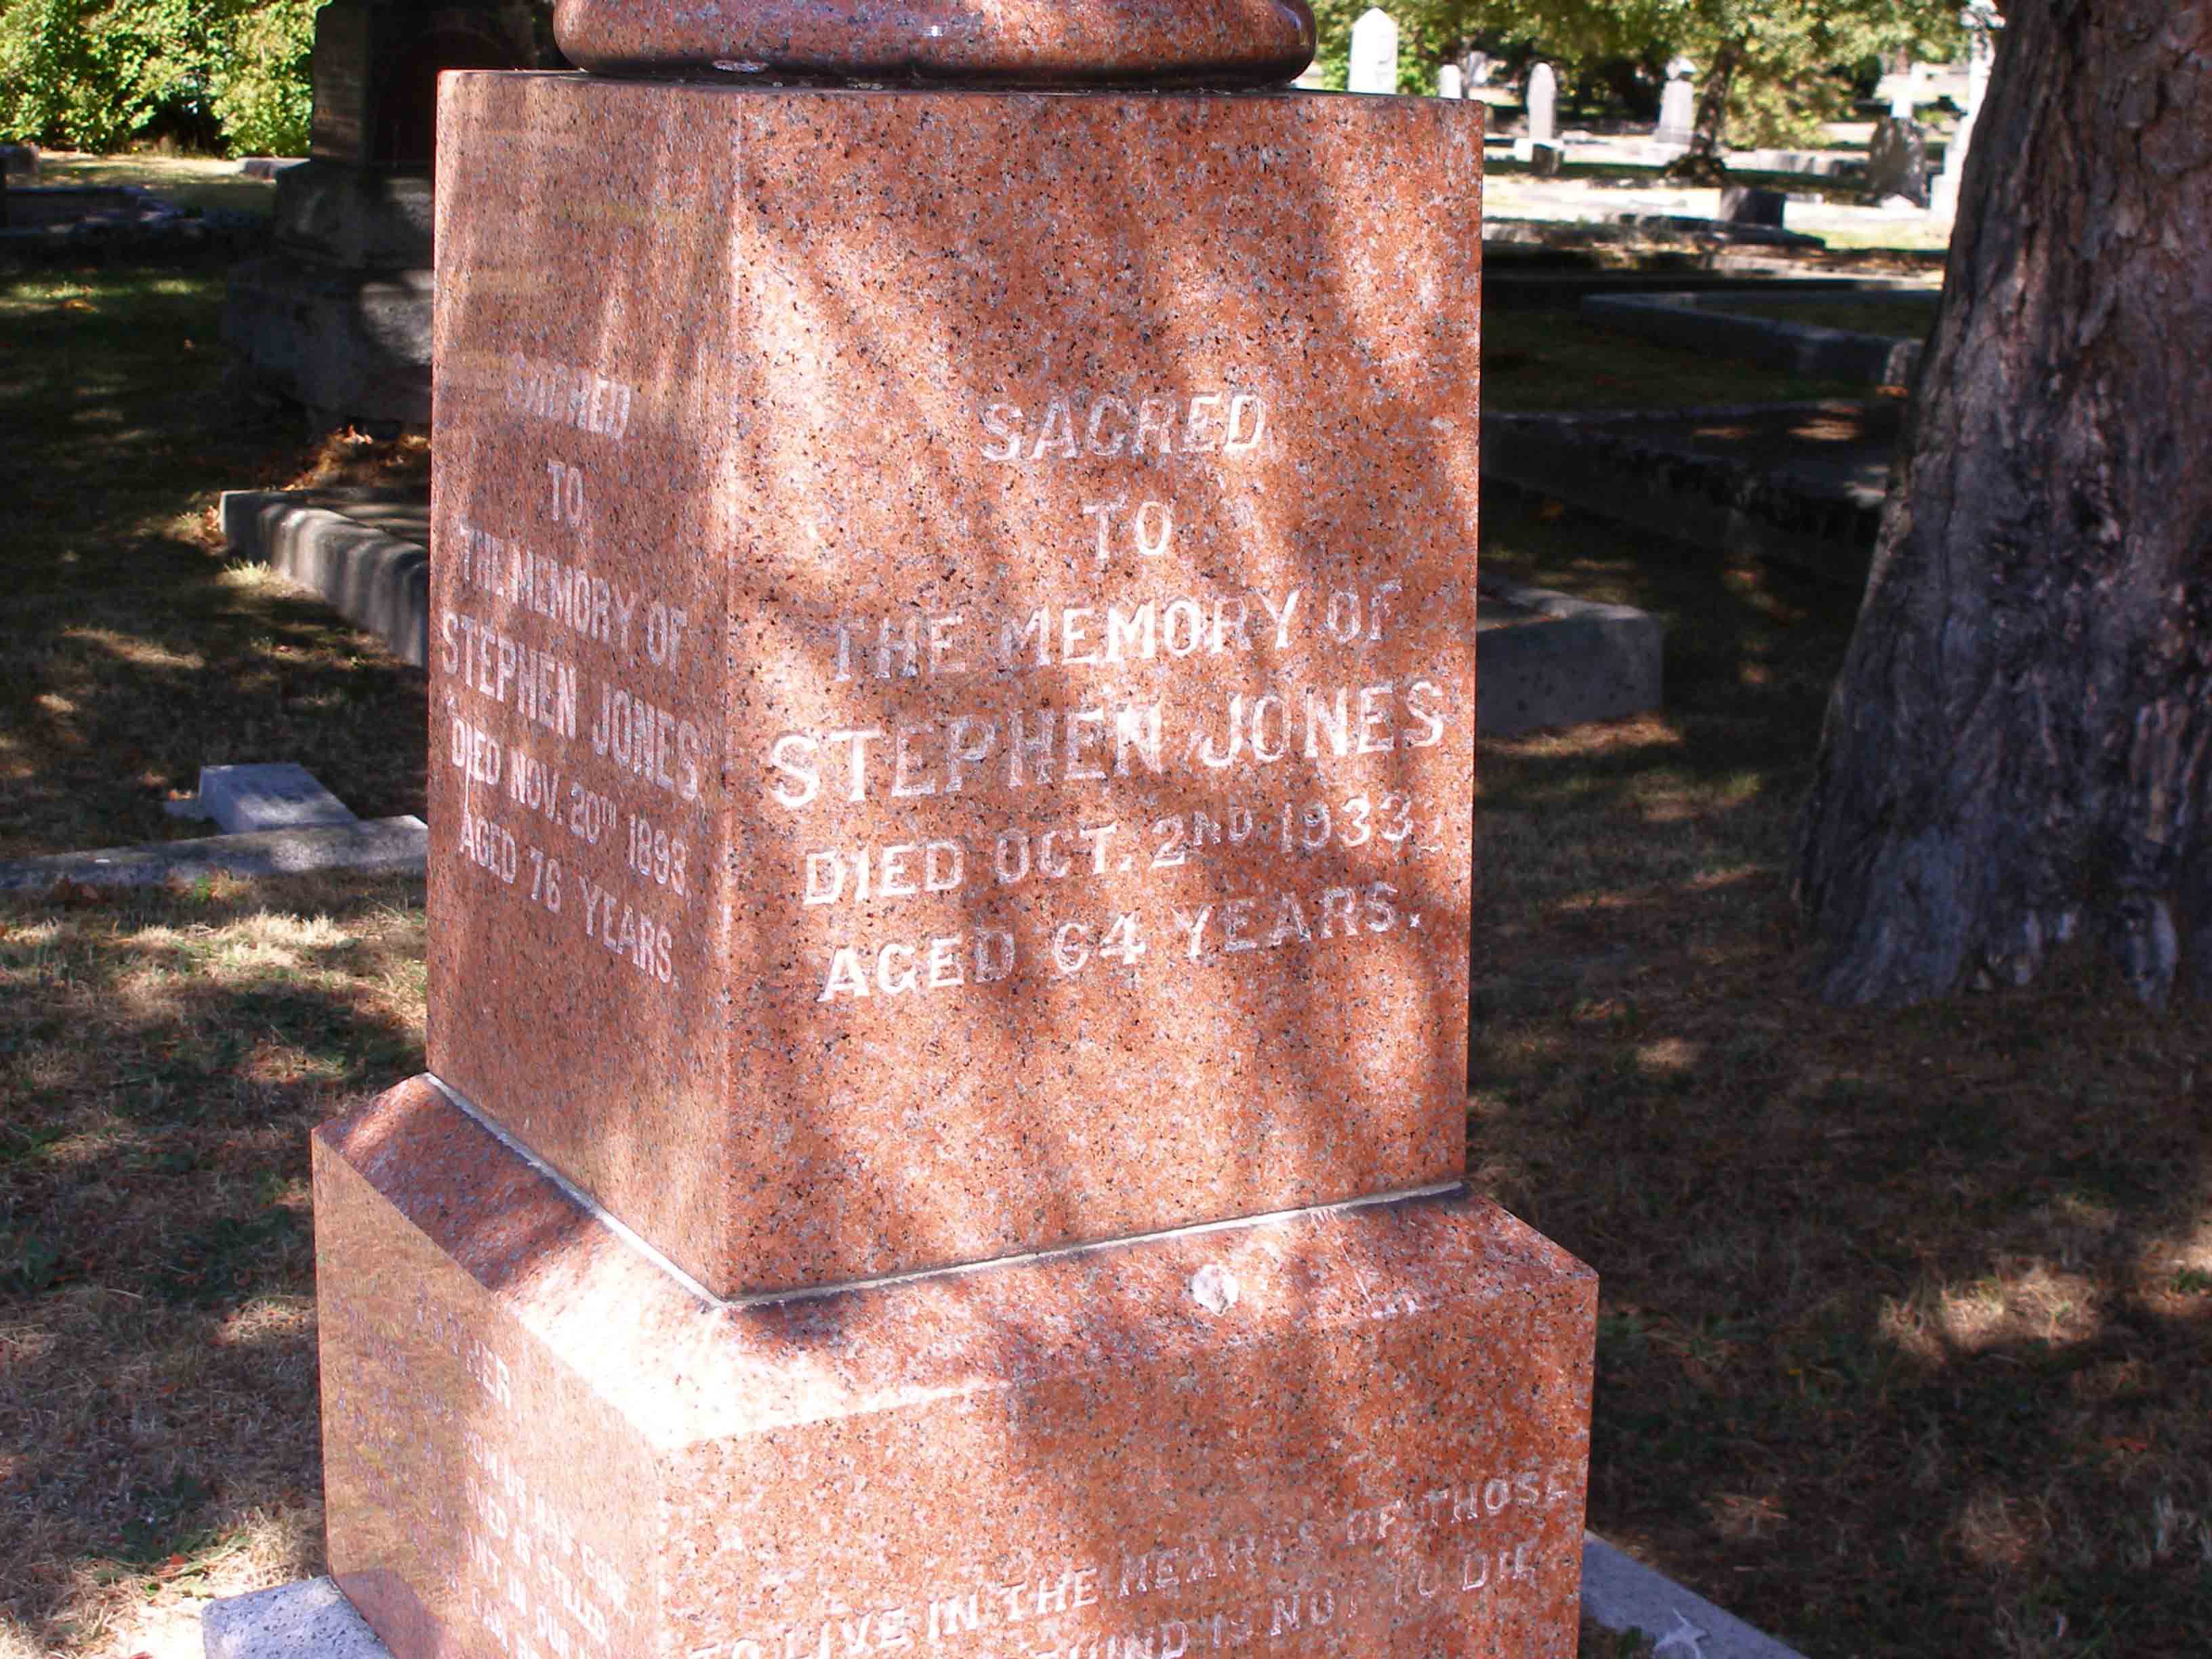 Stephen Jones tomb inscription